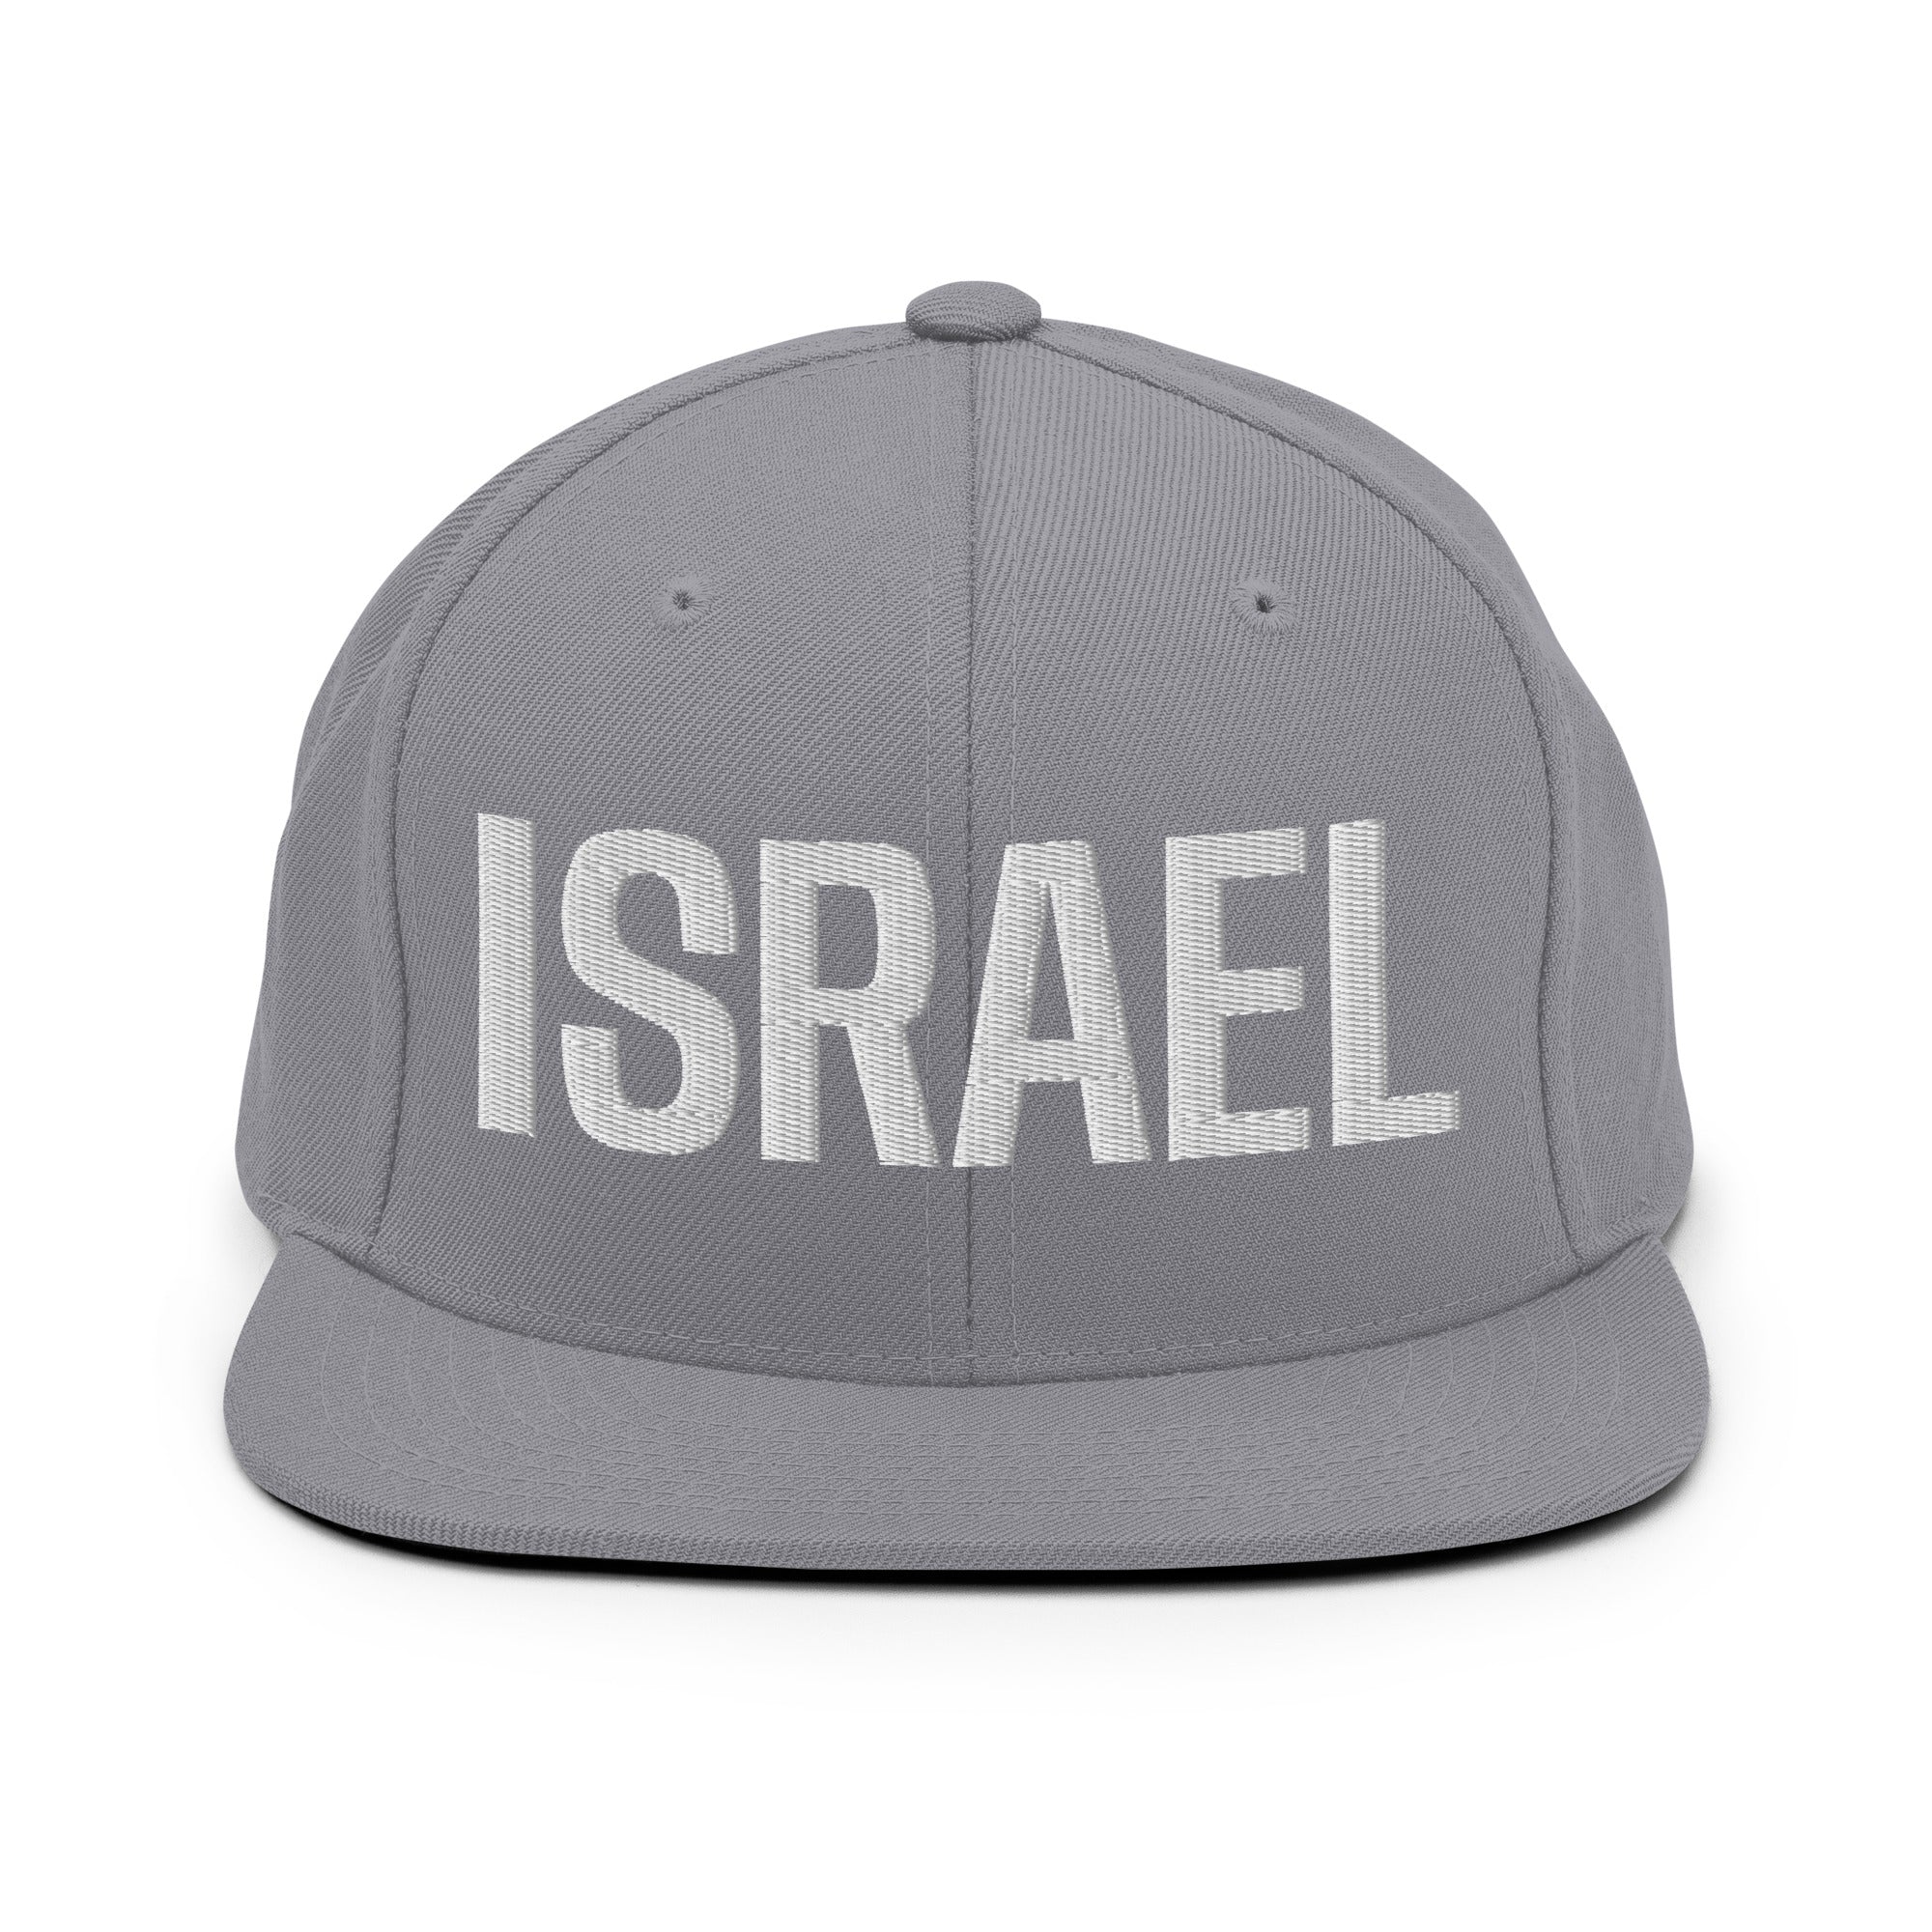 ISRAEL Snapback Hat